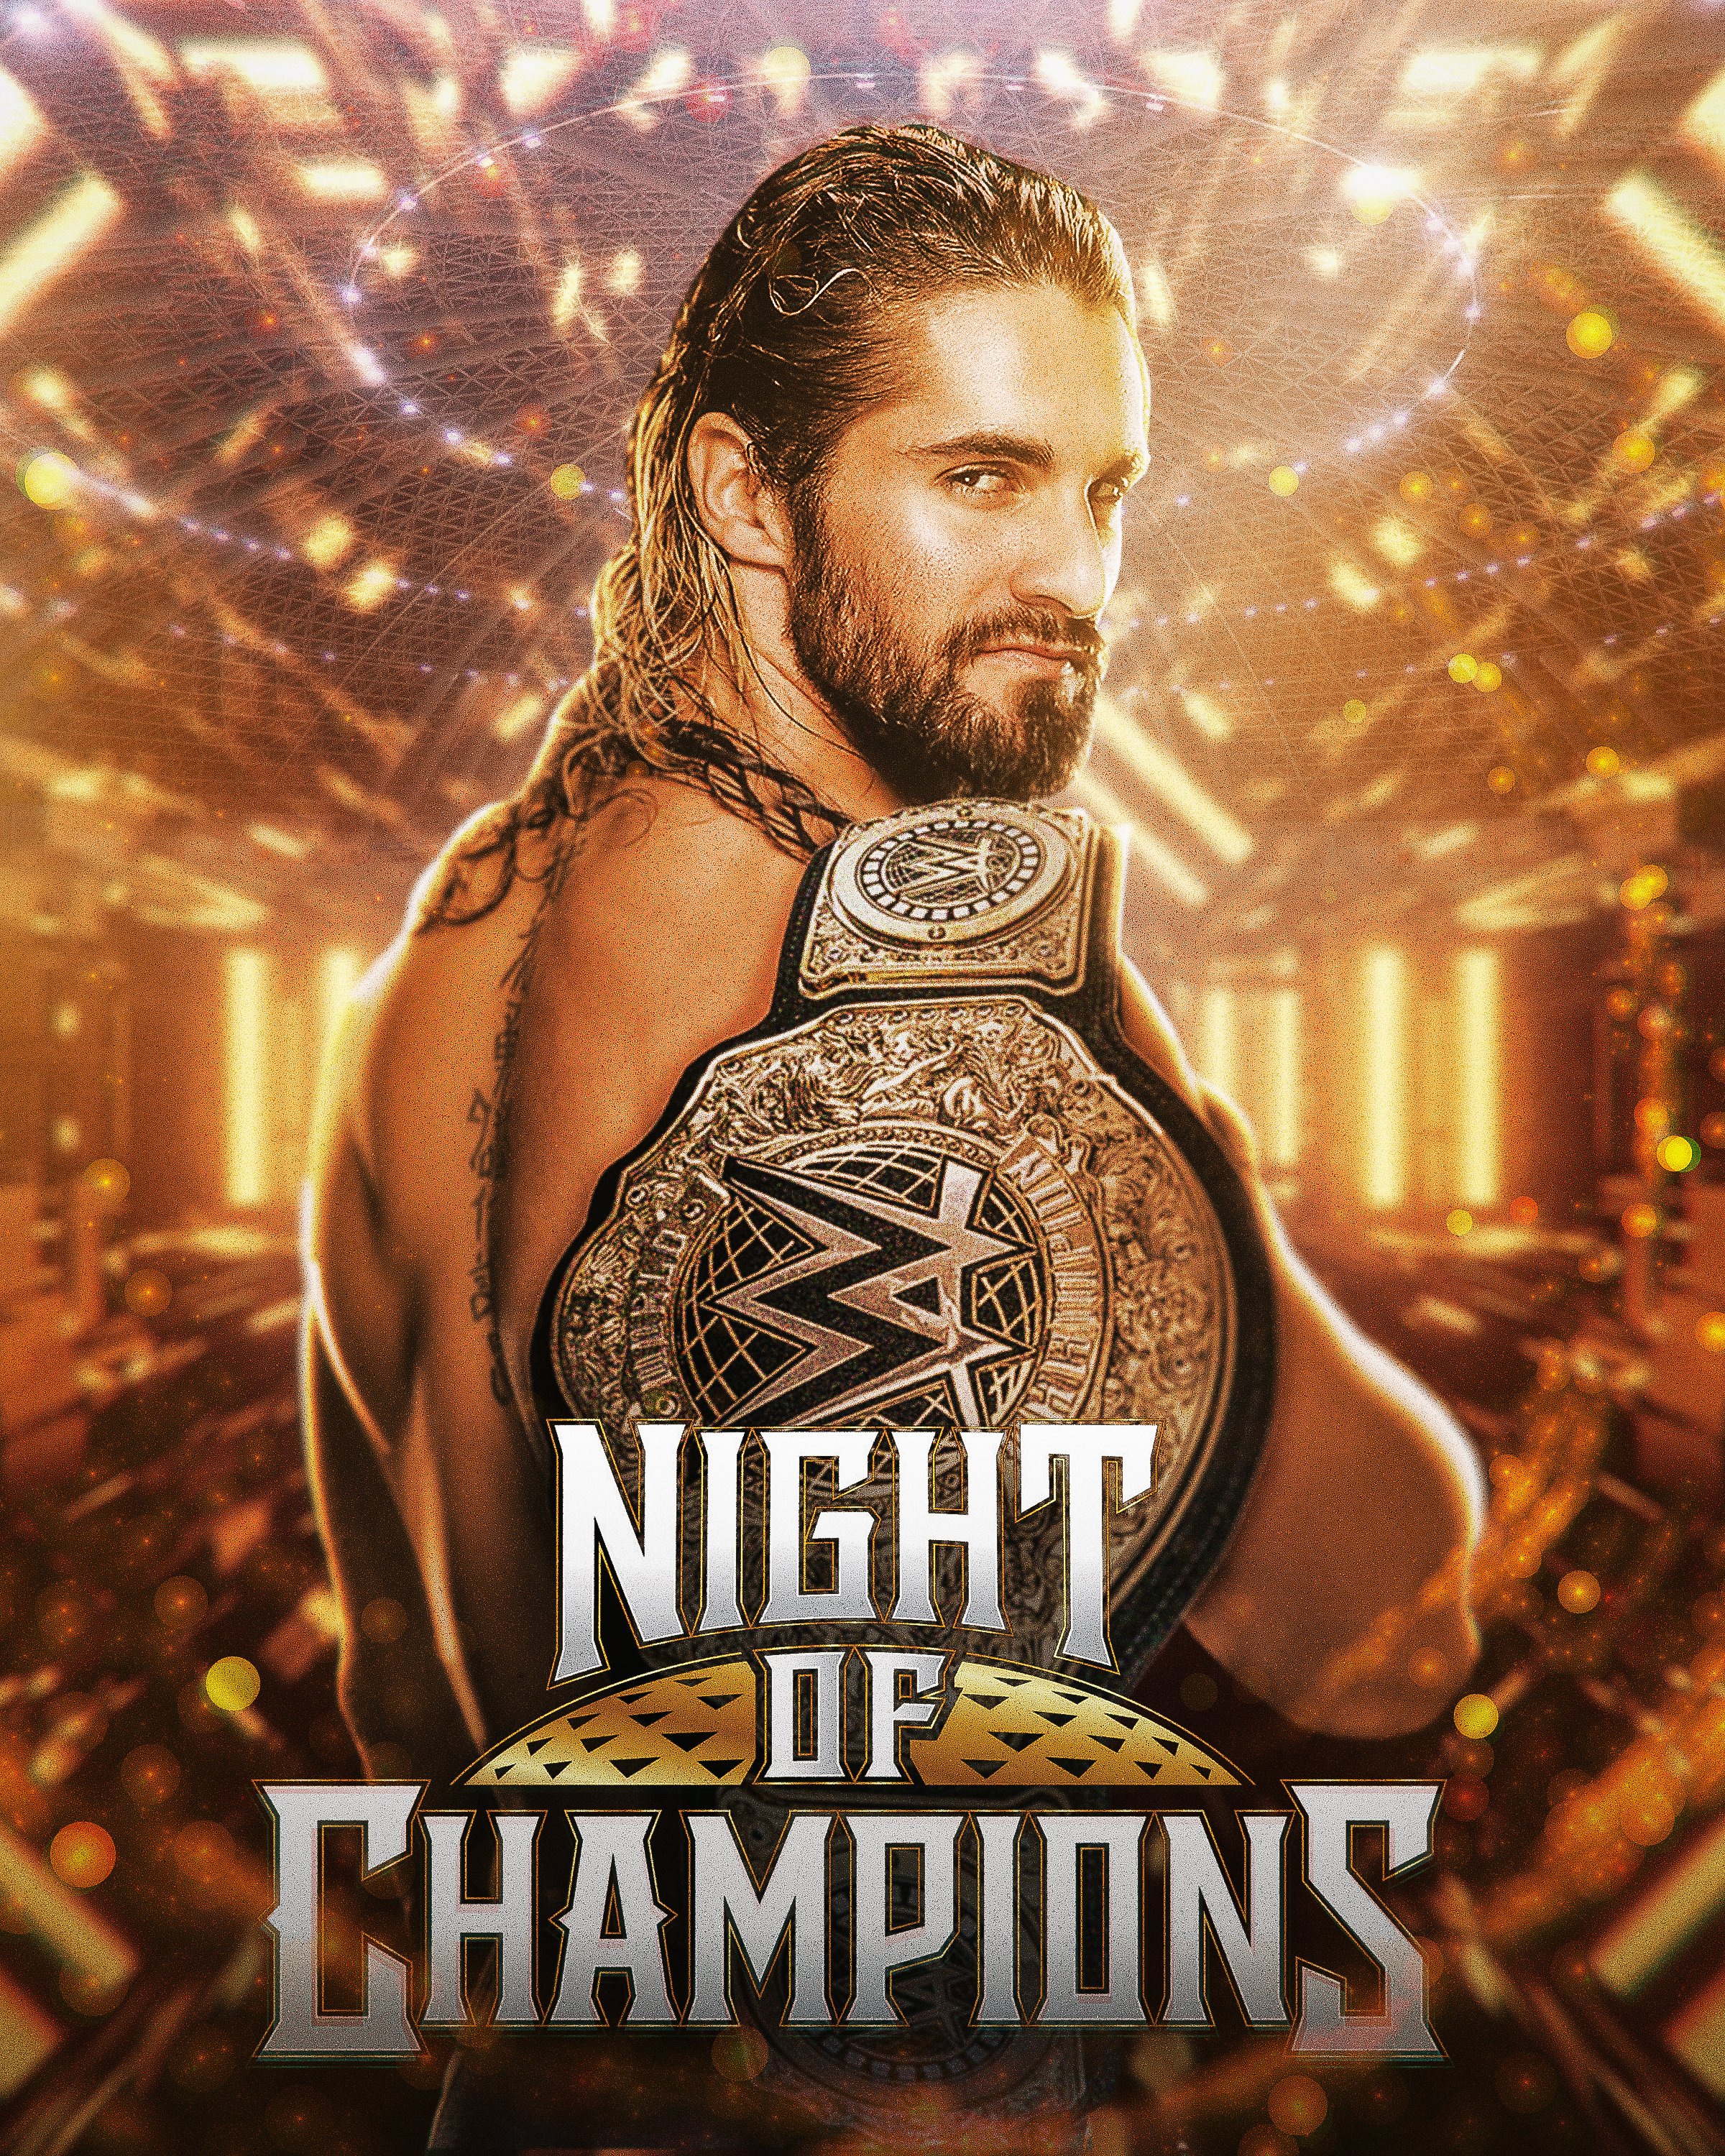 Seth_Night of Champions.jpg